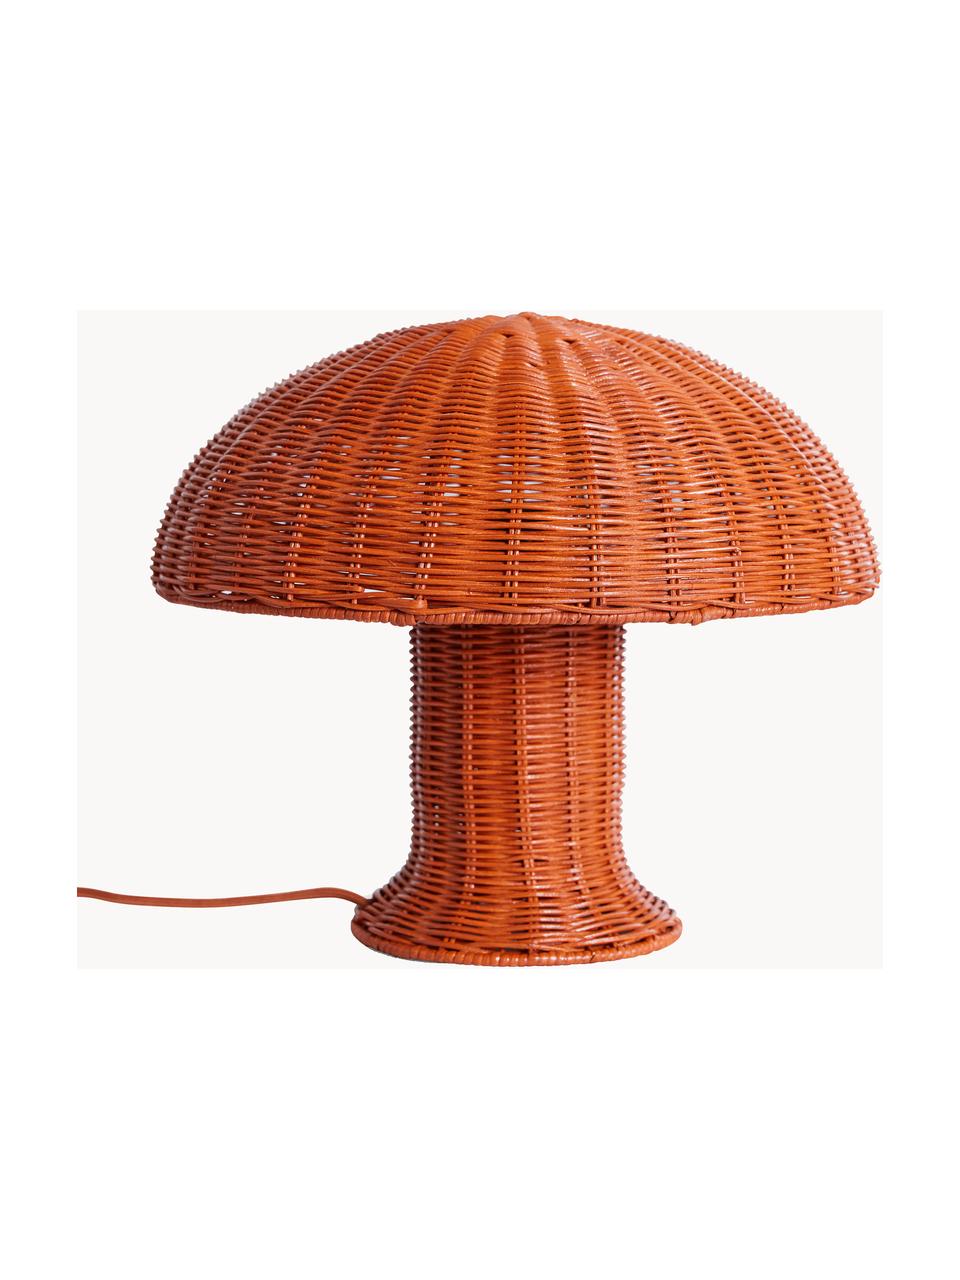 Lampe à poser en rotin Coral, Terracotta, Ø 34 x haut. 30 cm